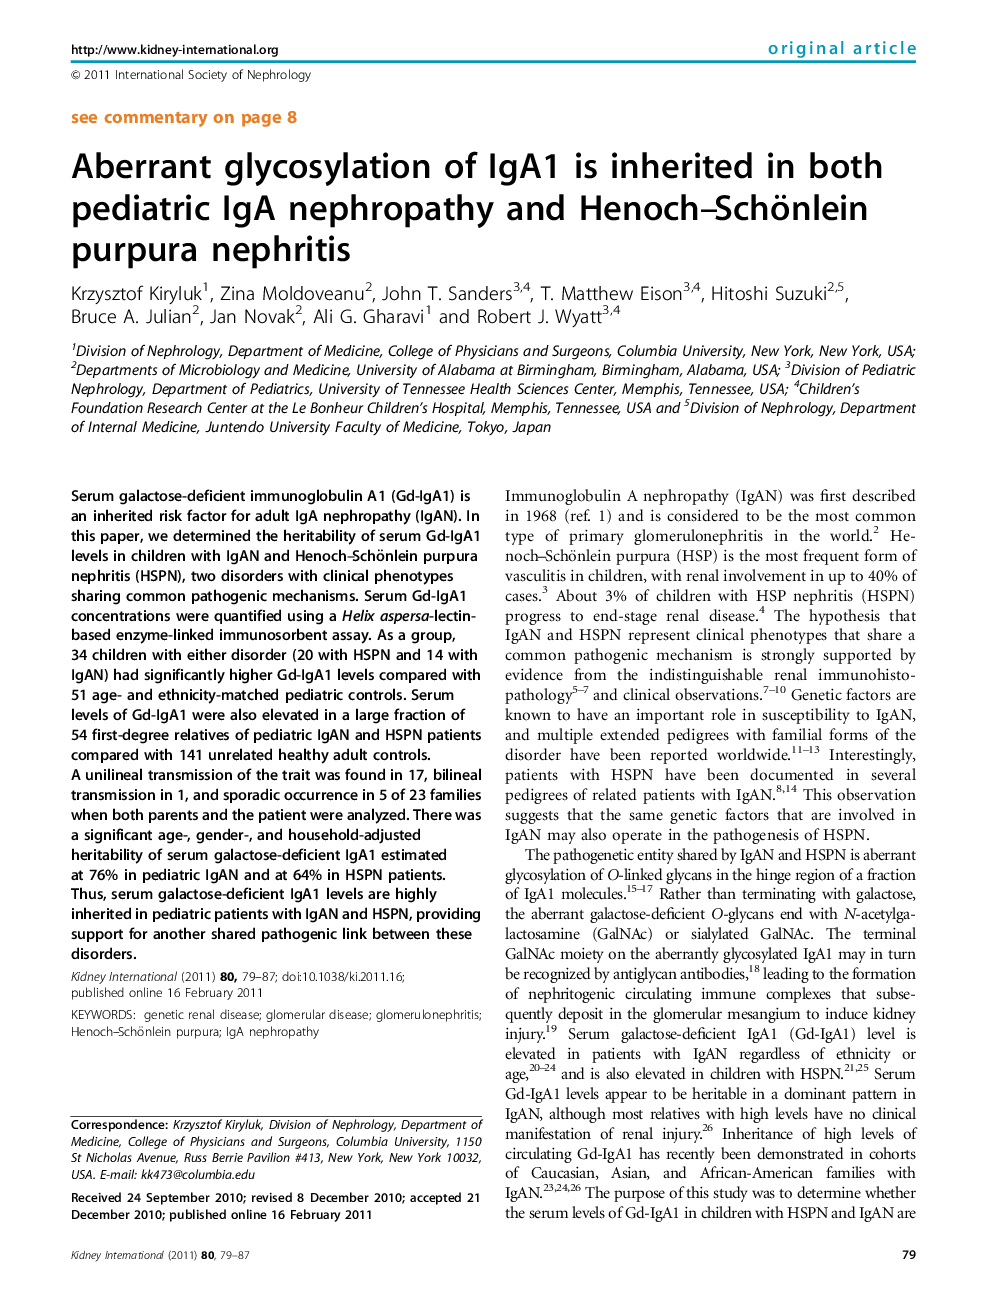 Aberrant glycosylation of IgA1 is inherited in both pediatric IgA nephropathy and Henoch-Schönlein purpura nephritis